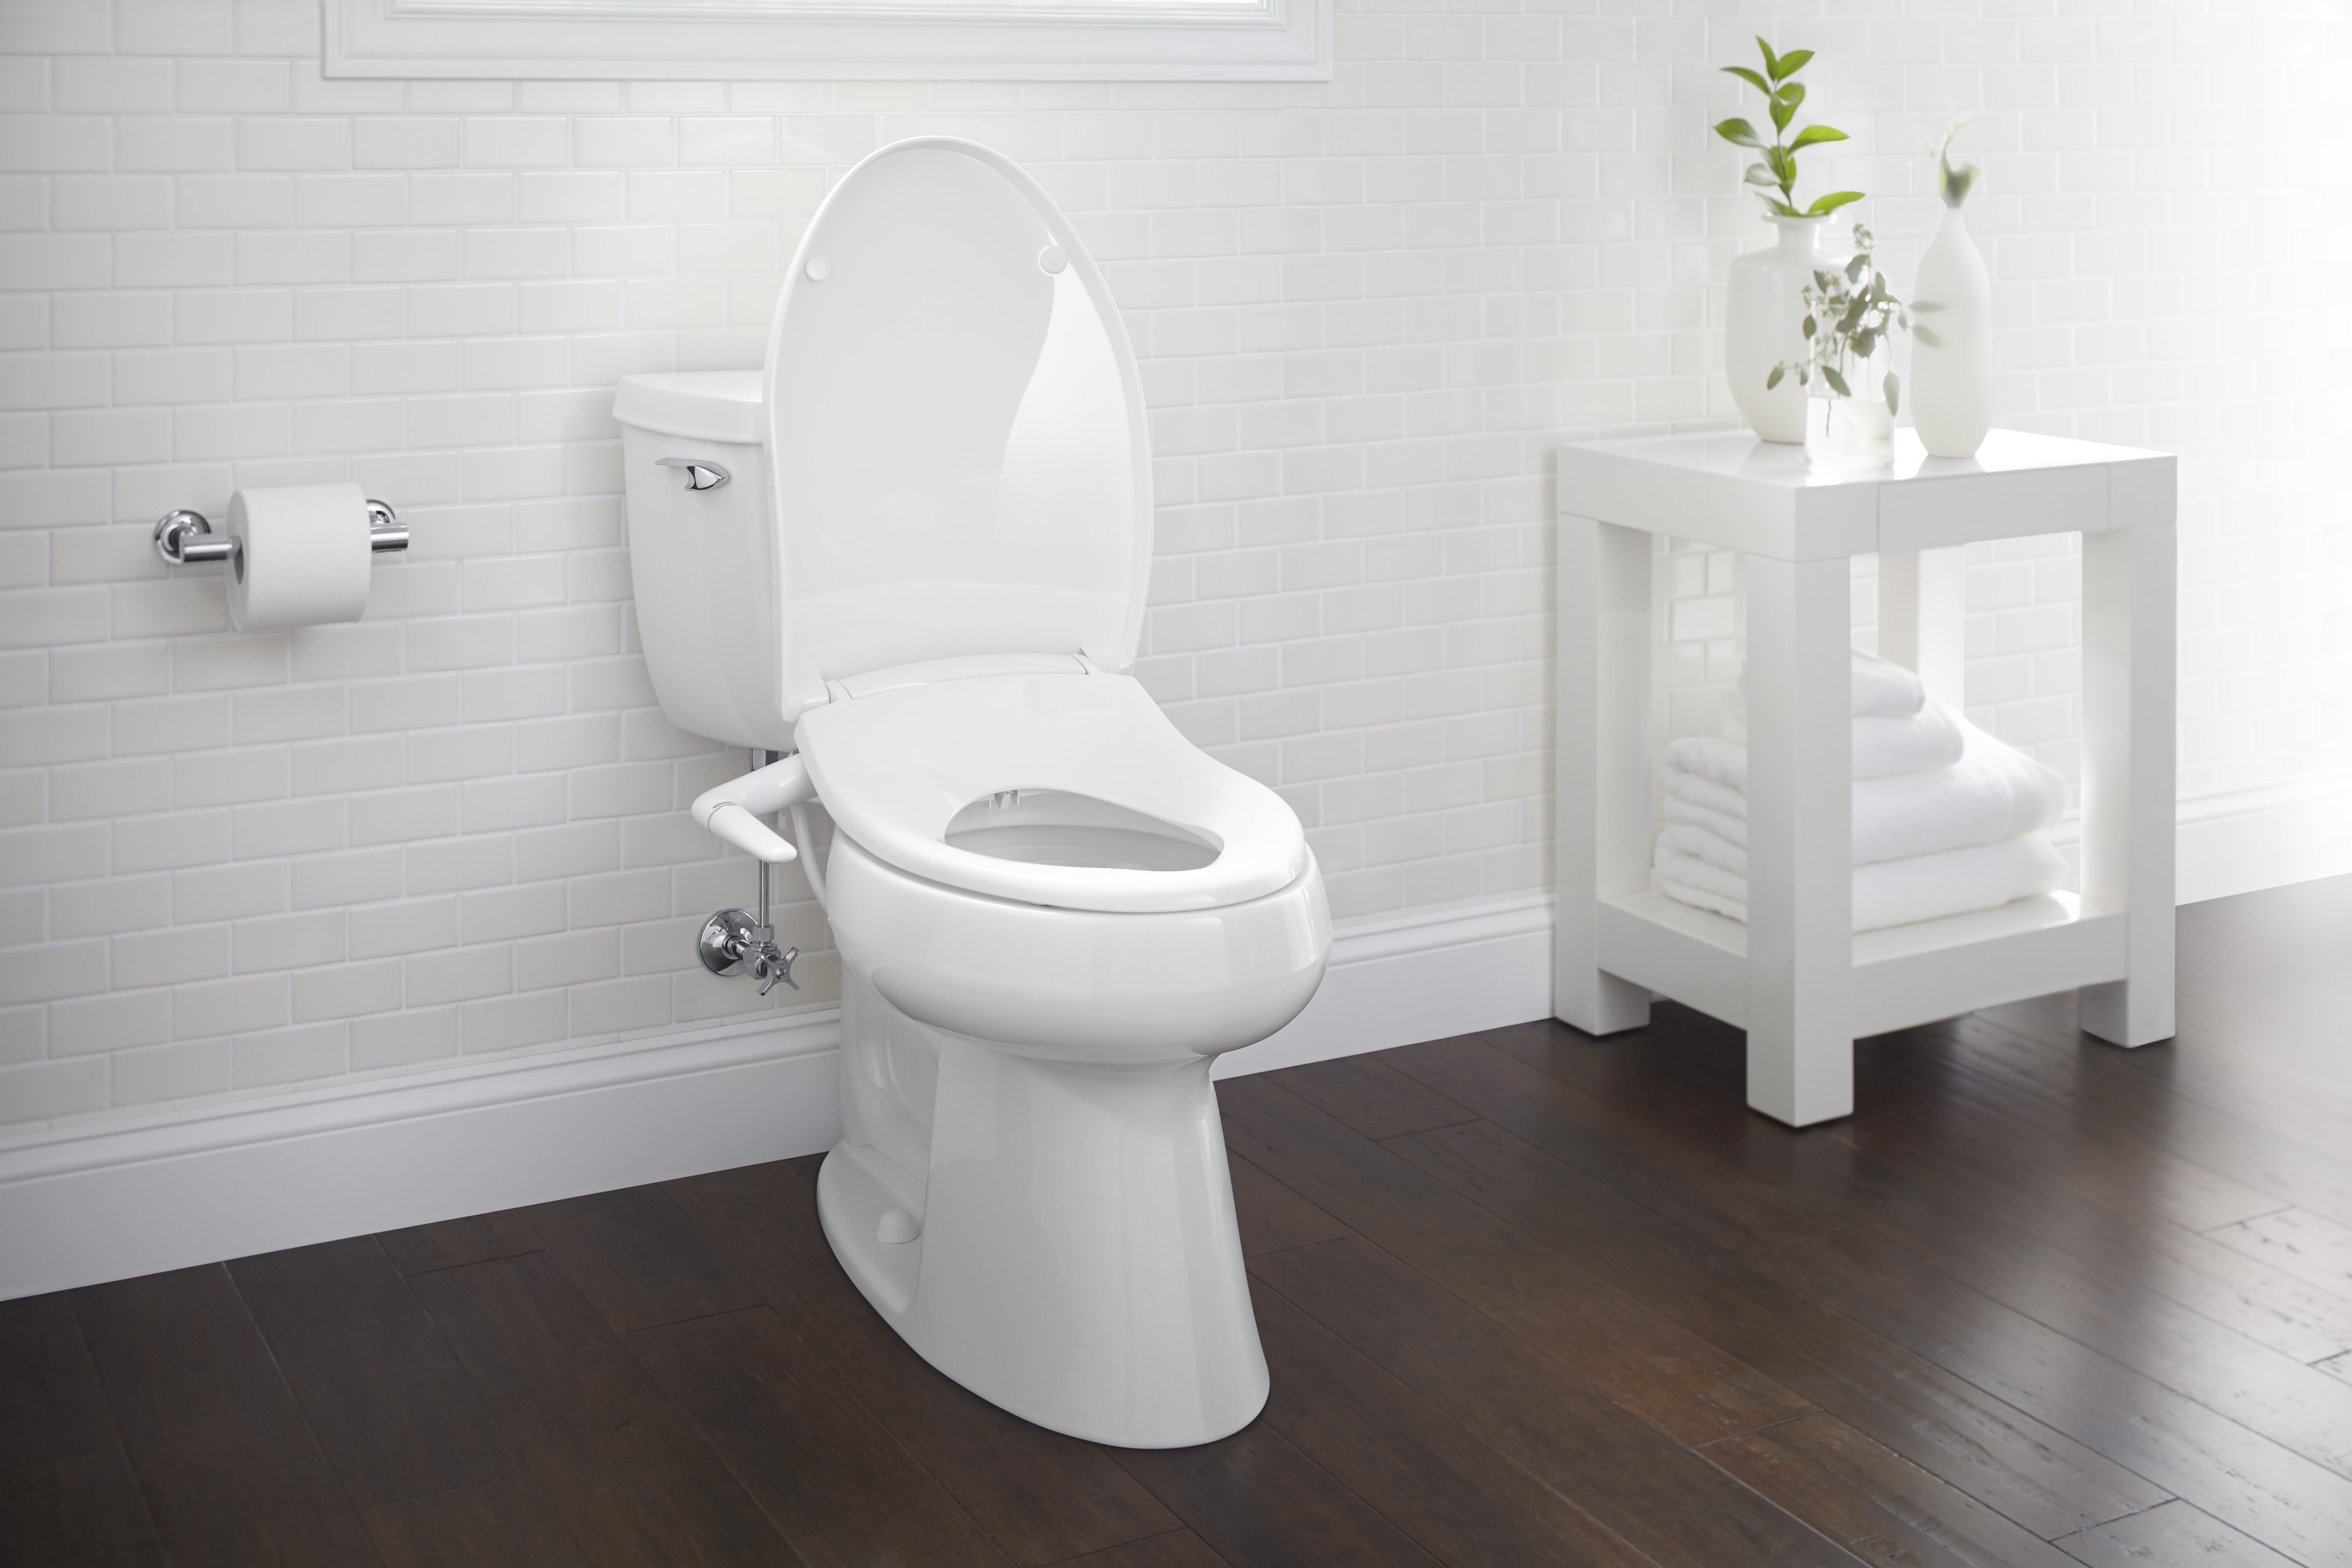 White toilet with bidet seat in bathroom